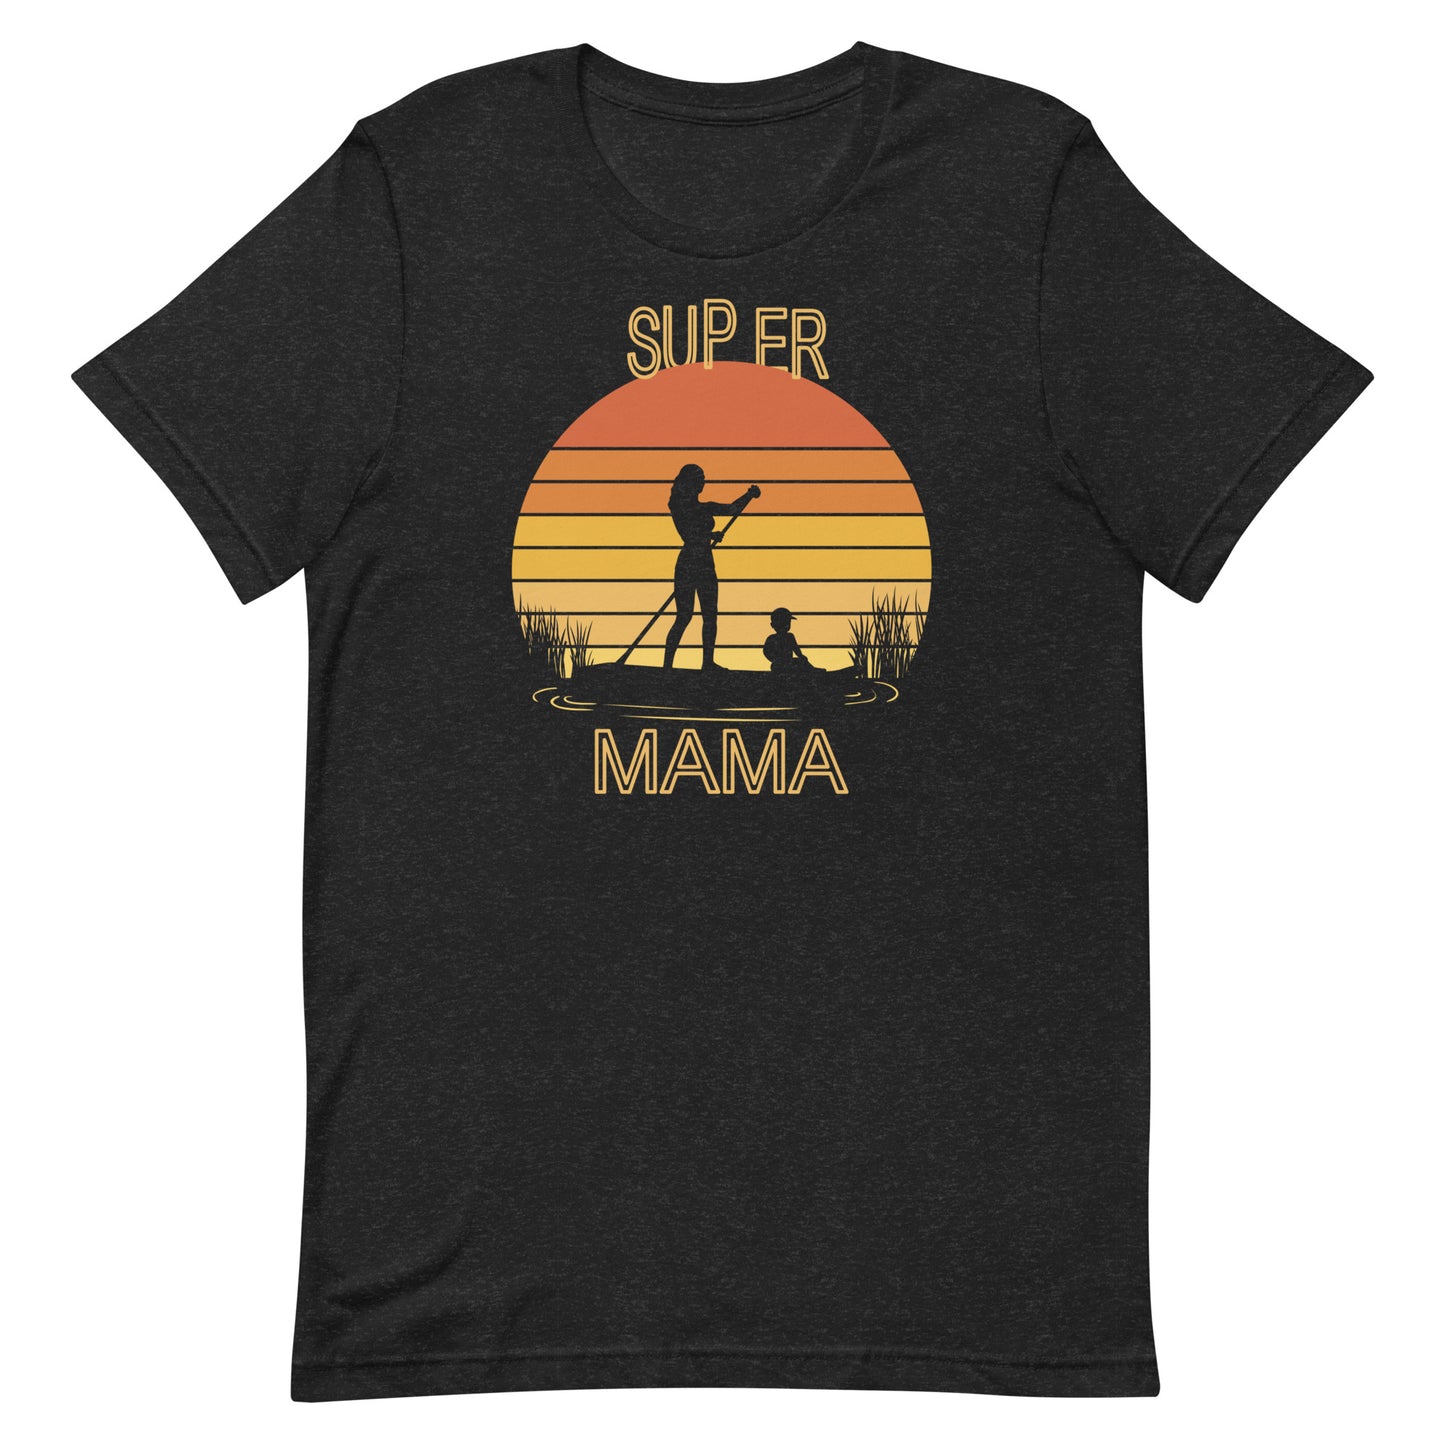 SUP ER MAMA T-Shirt